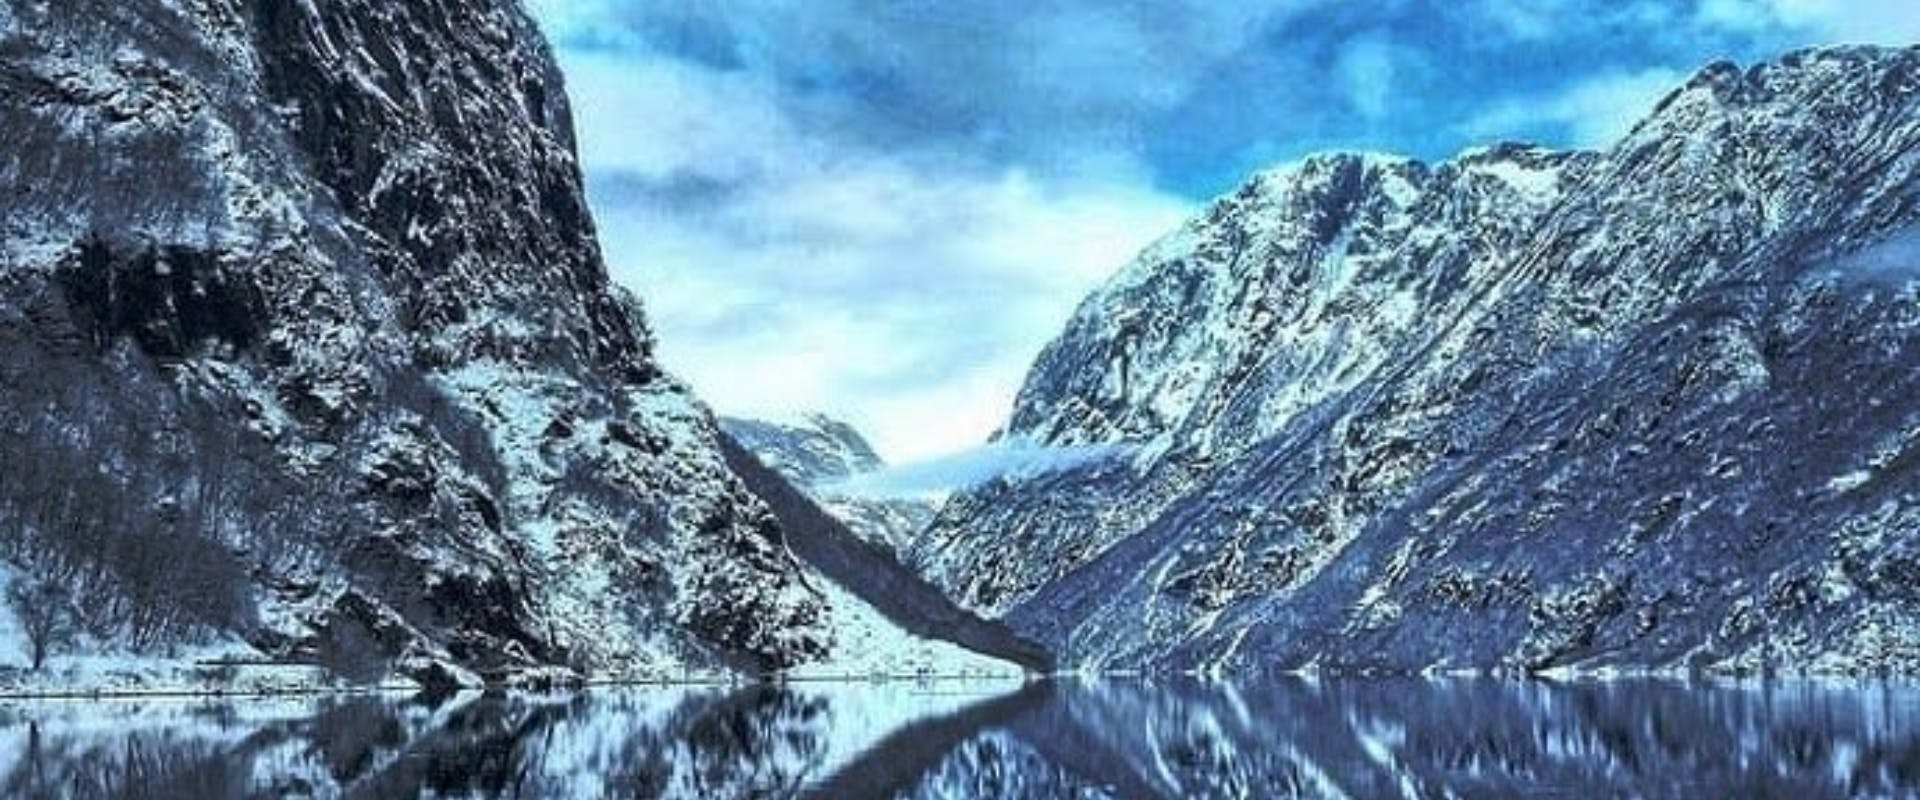 Gundvagen fjord in Norway - @Catgoddess_99